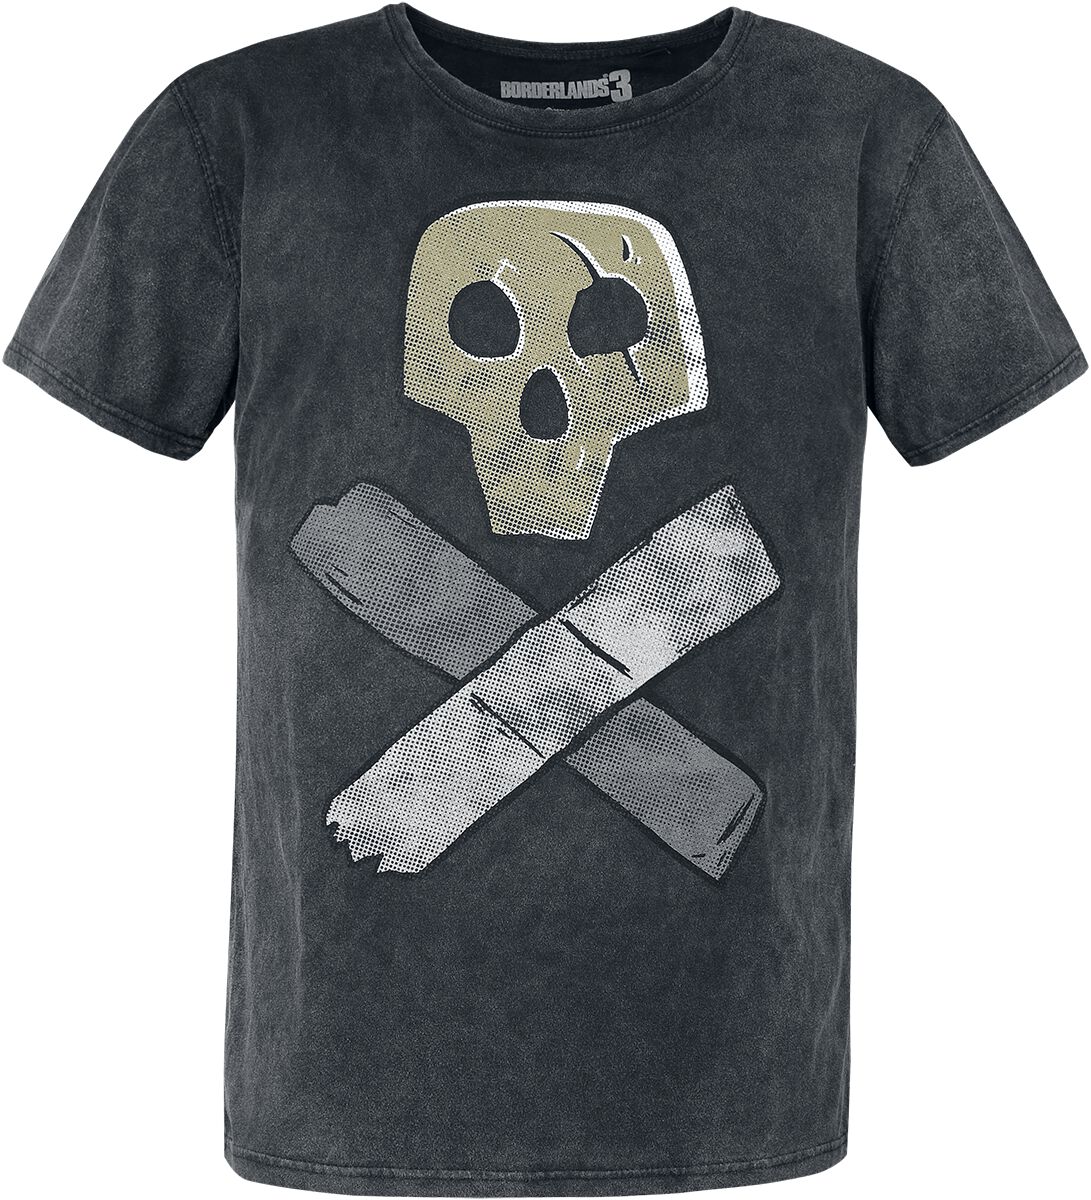 Borderlands 3 - Skull T-Shirt grau in S